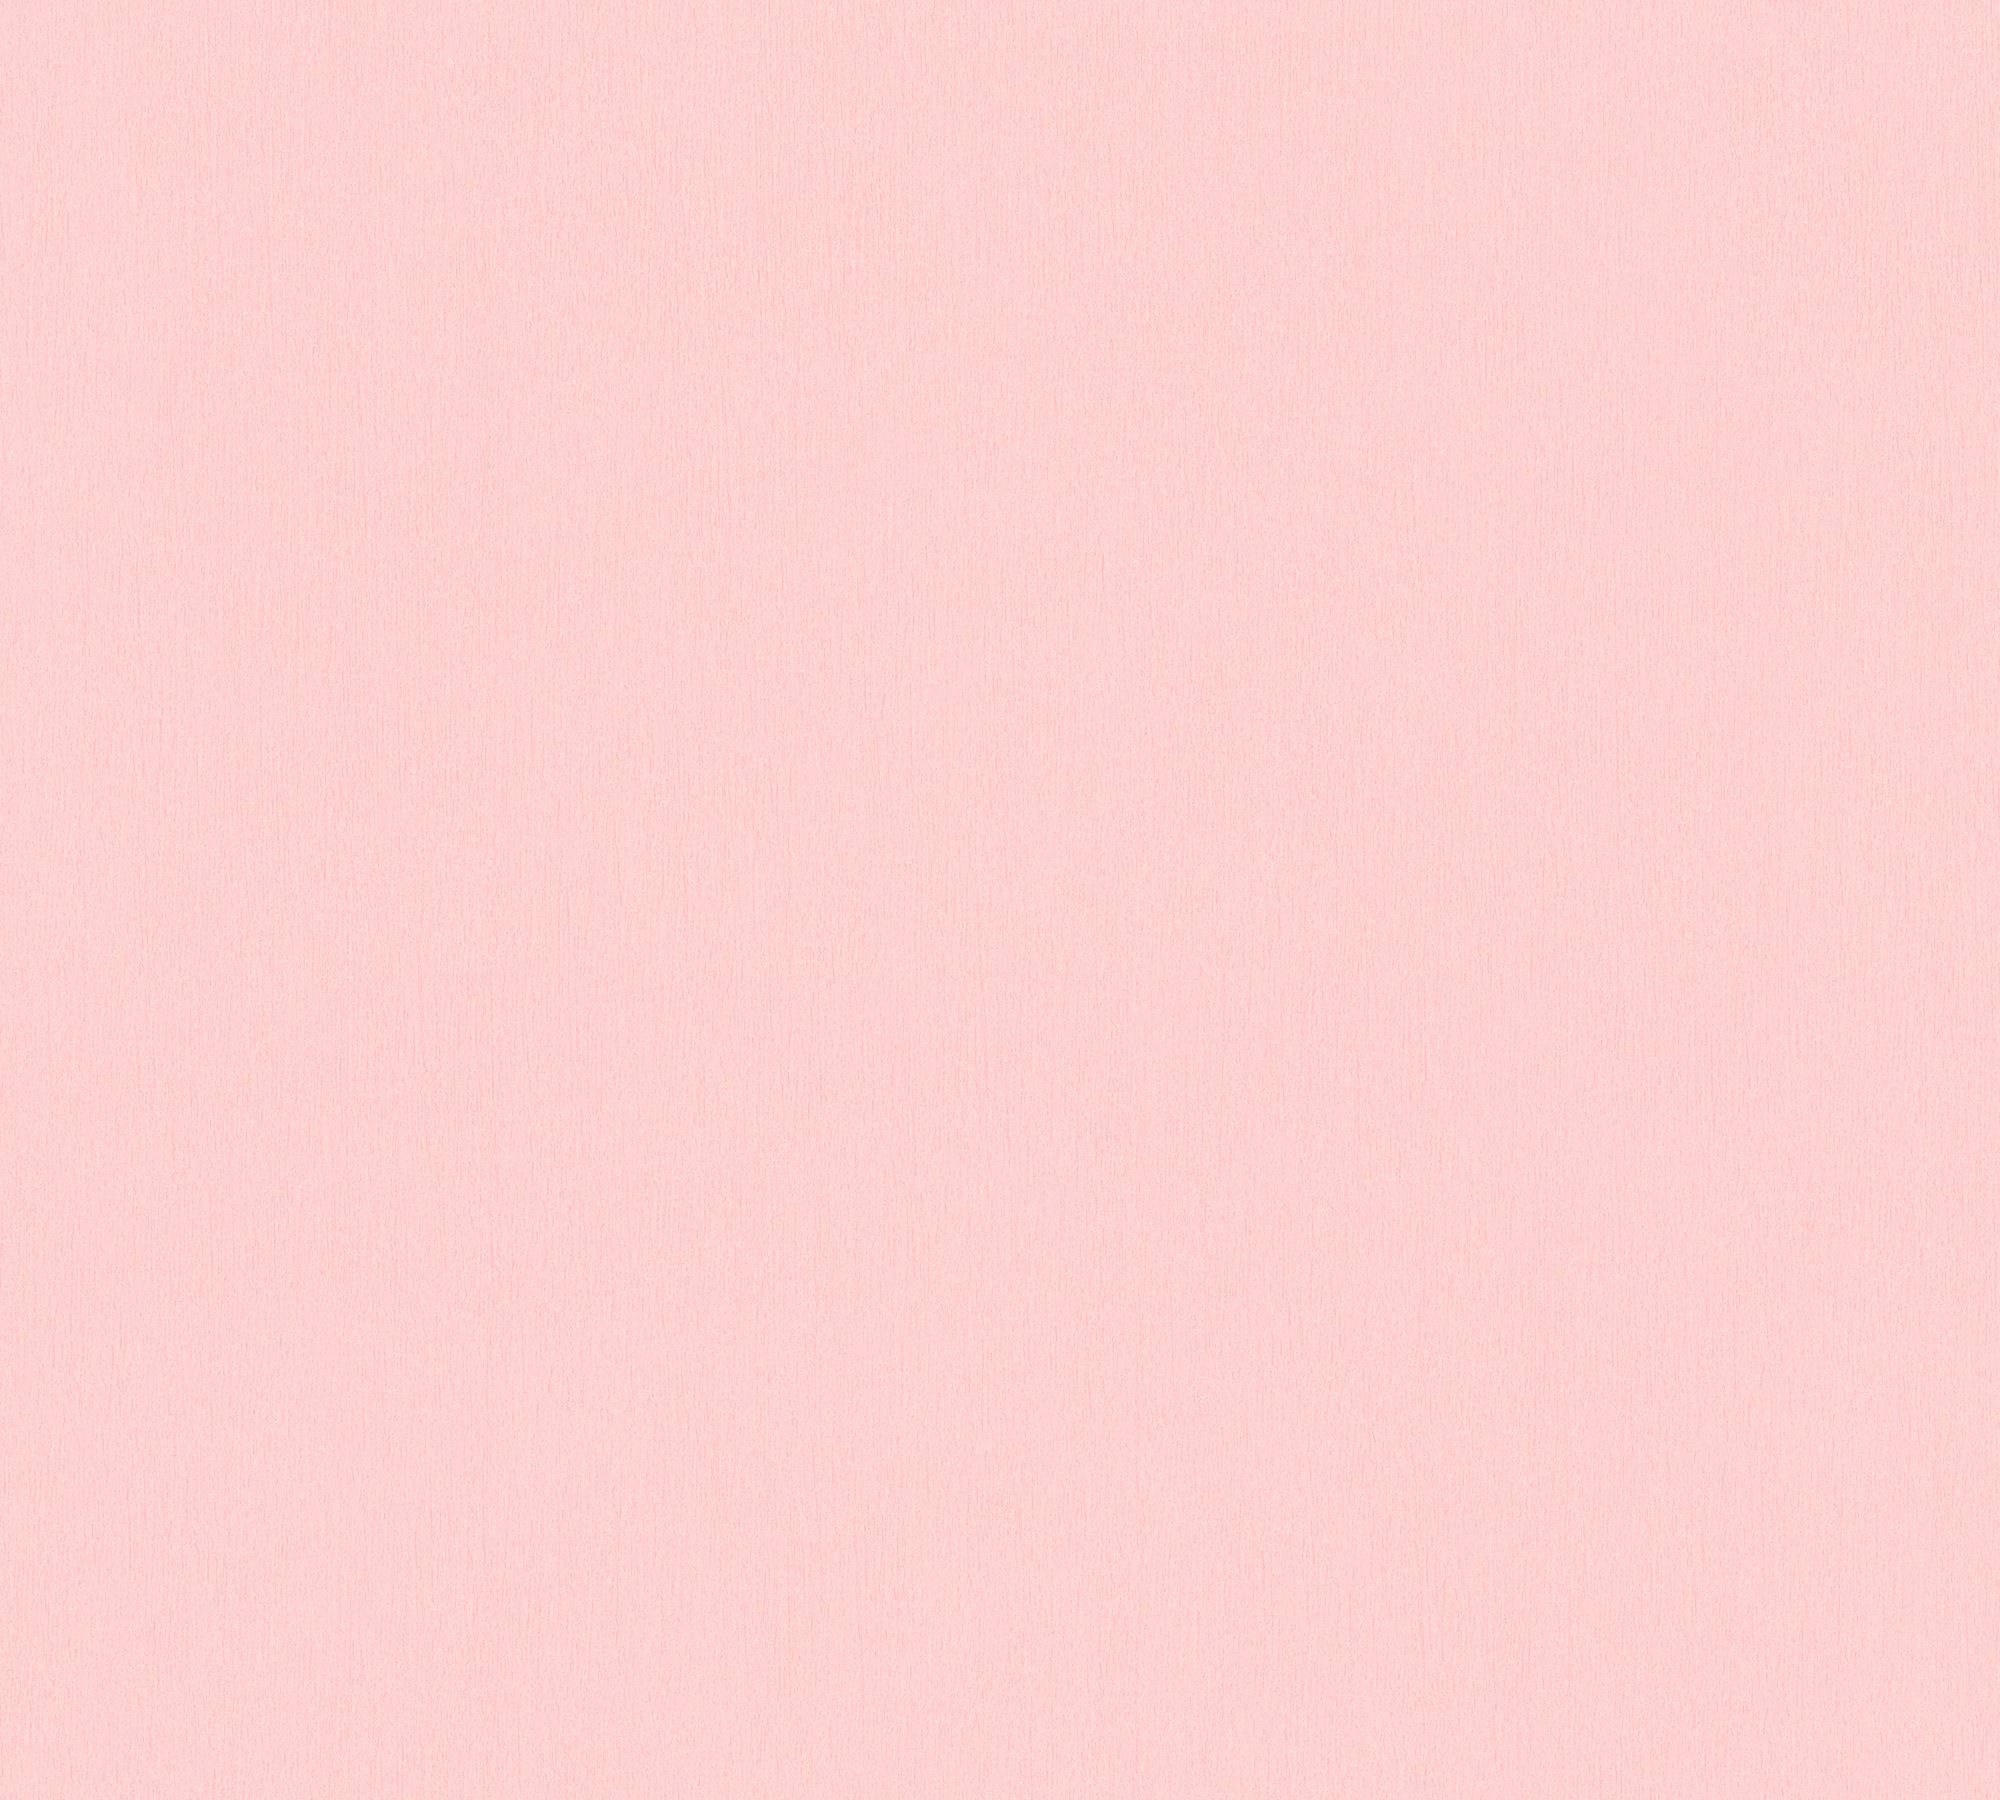 Tapete Création rosa Little Vliestapete A.S. einfarbig, Uni Love, glatt, unifarben, Kinderzimmertapete